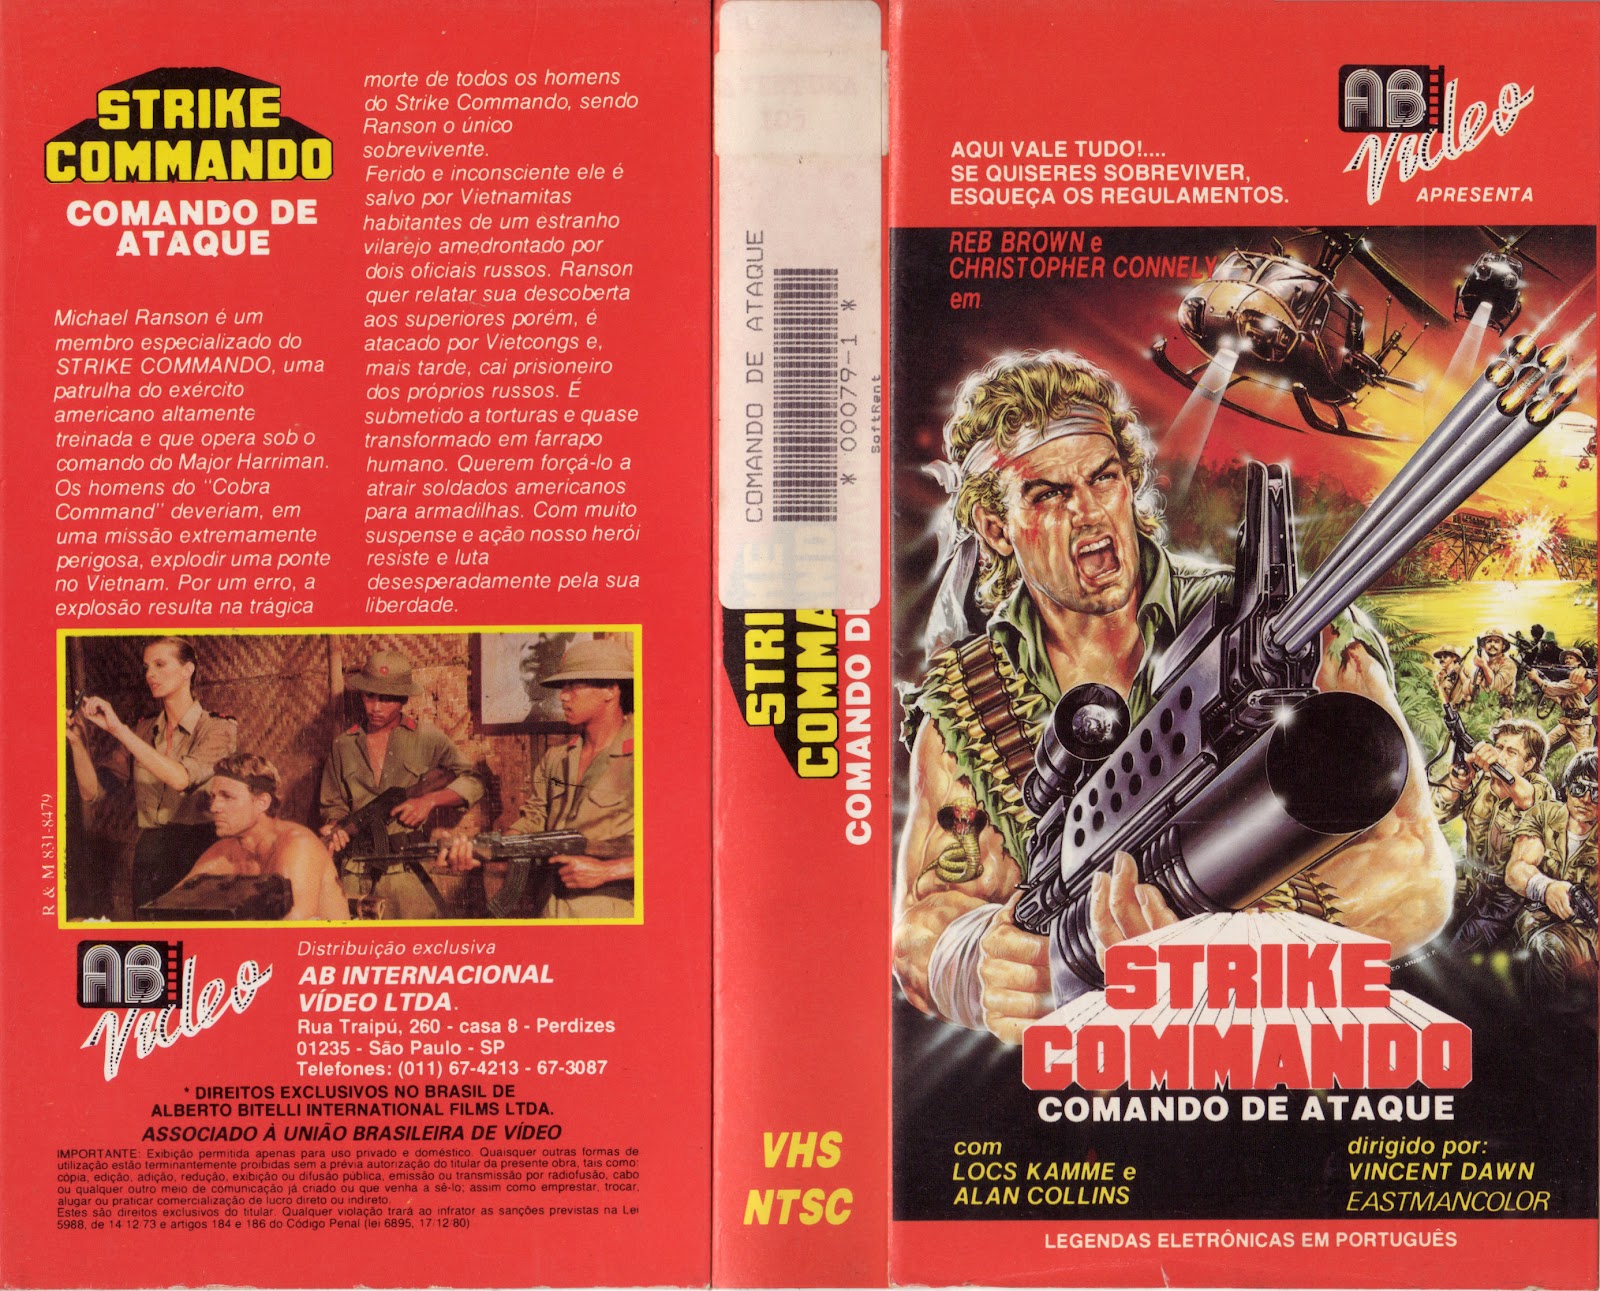 devotudoaocinema.com.br - Rebobinando o VHS - "Comando de Ataque", de Bruno Mattei